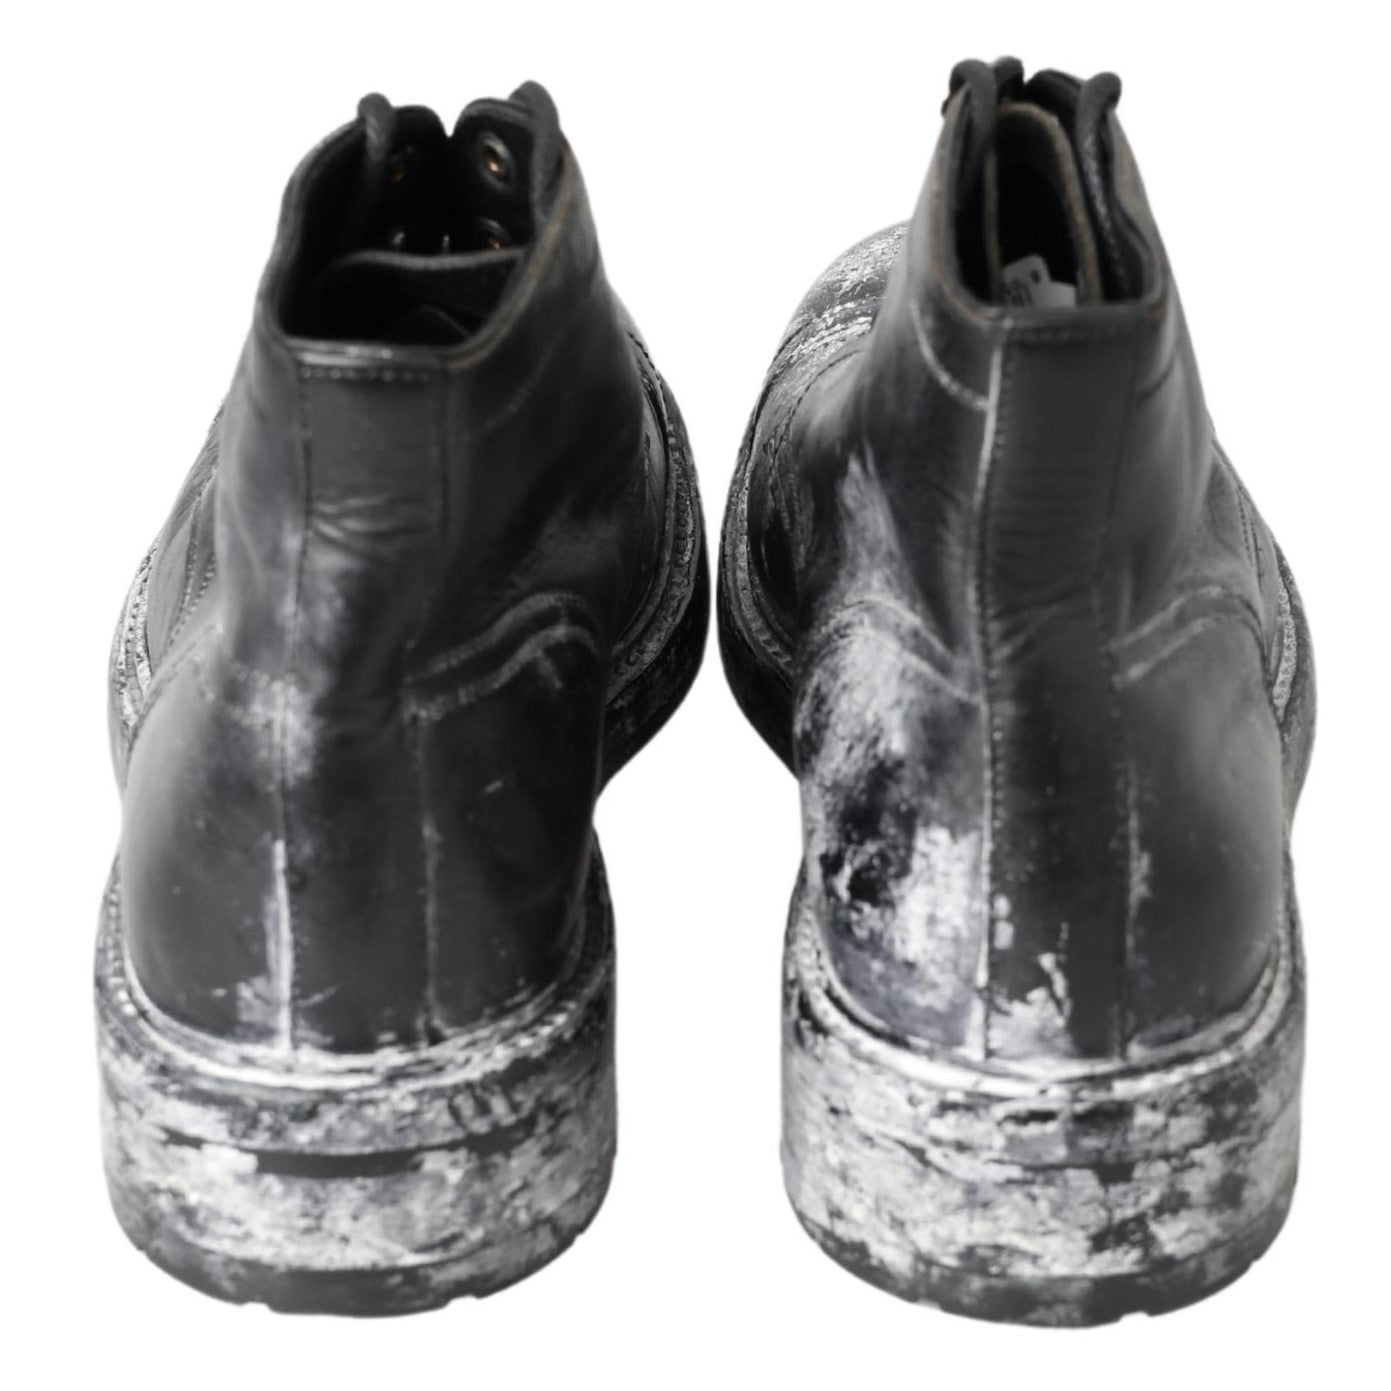 Elegant Leather Combat Boots in Black